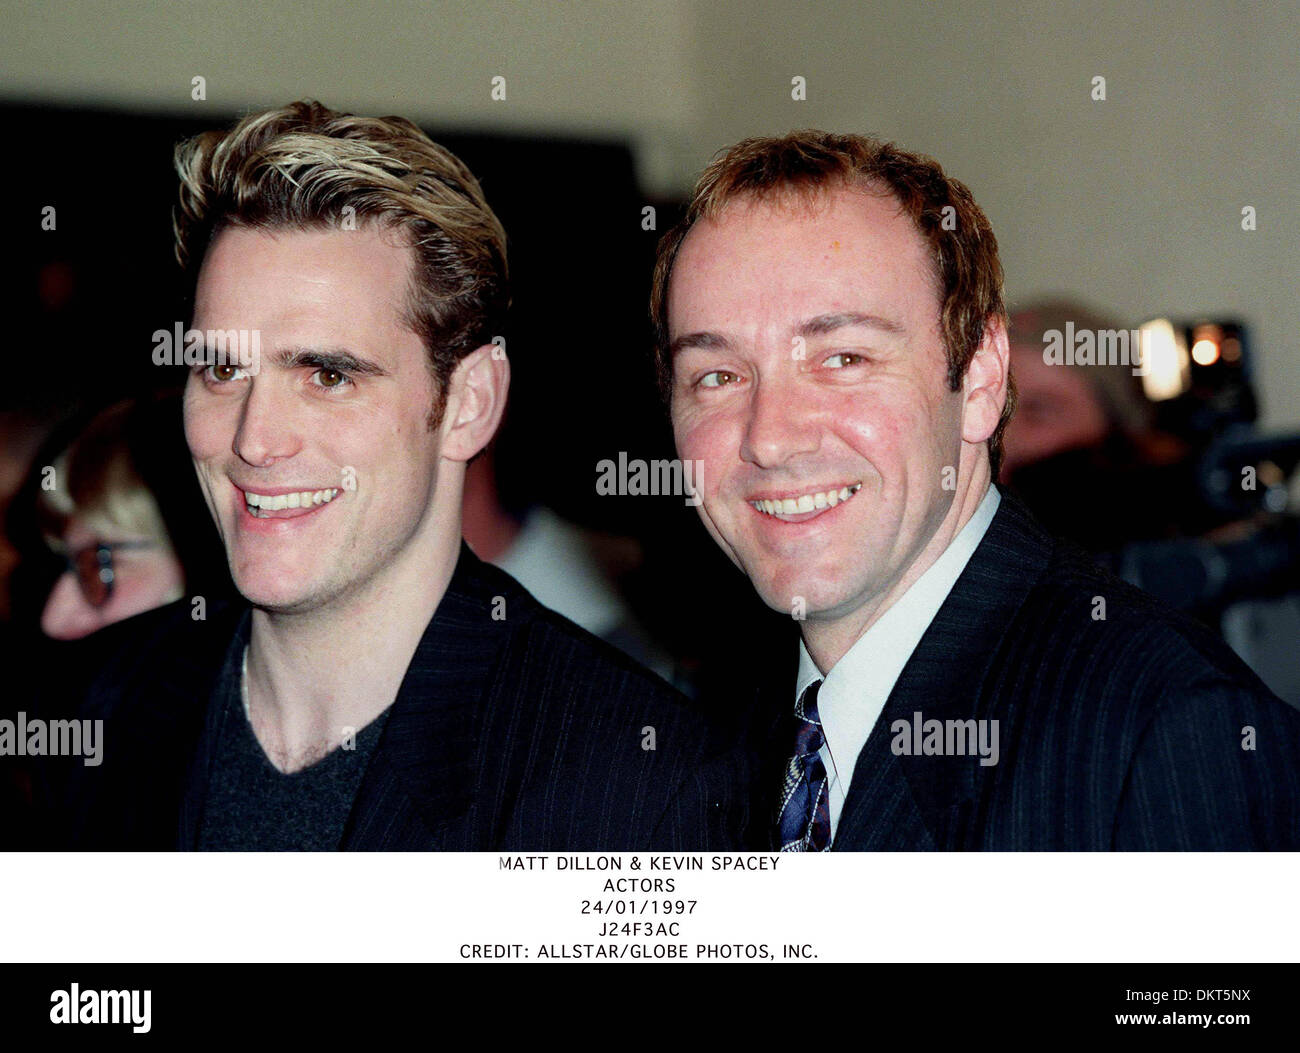 MATT DILLON & KEVIN SPACEY.ACTORS.24/01/1997.J24F3AC. Stock Photo